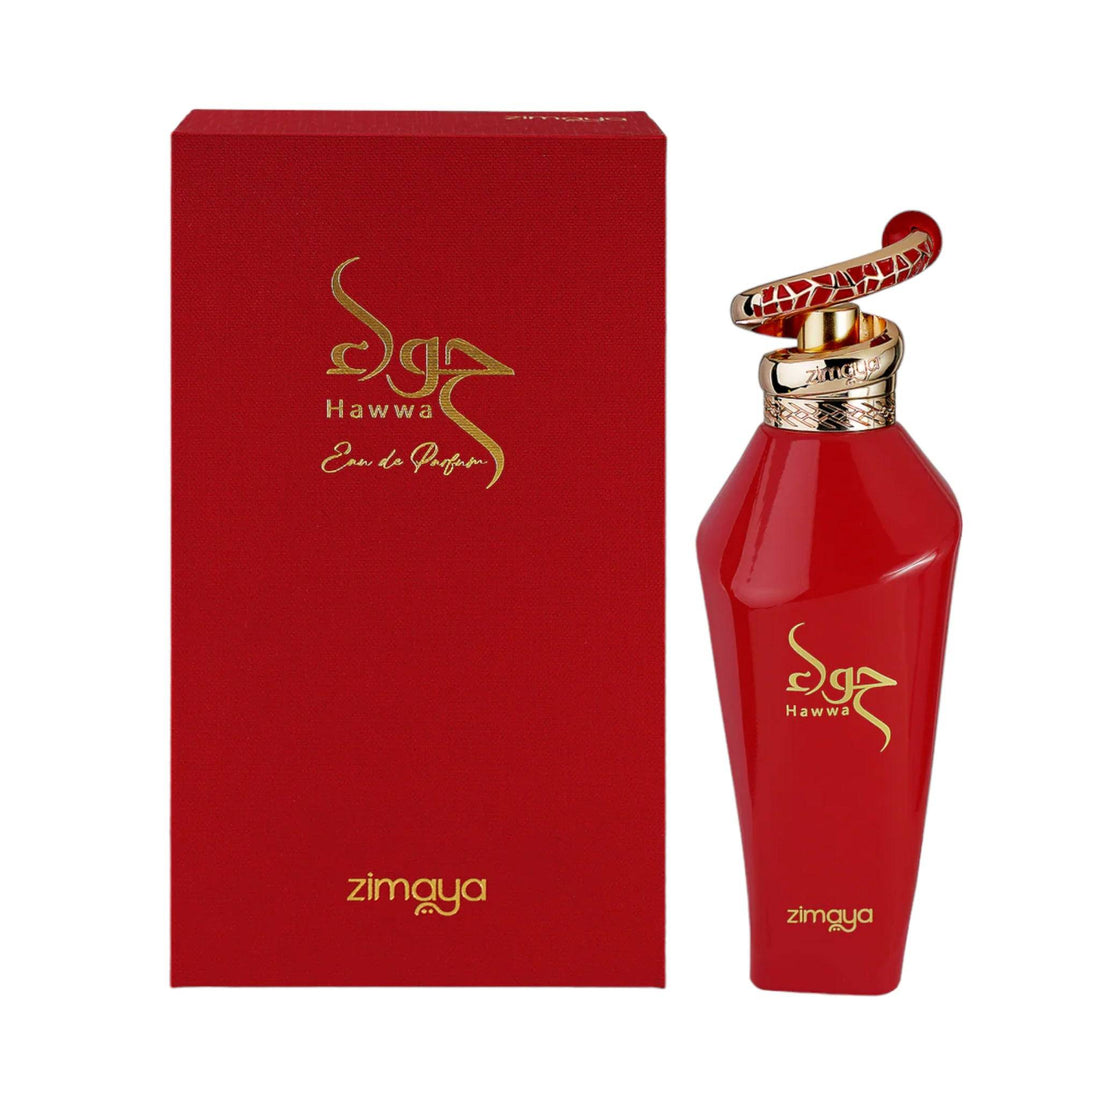 Striking 100ml bottle of Zimaya Hawwa Red Eau De Parfum, encapsulating its bold and charismatic fragrance.